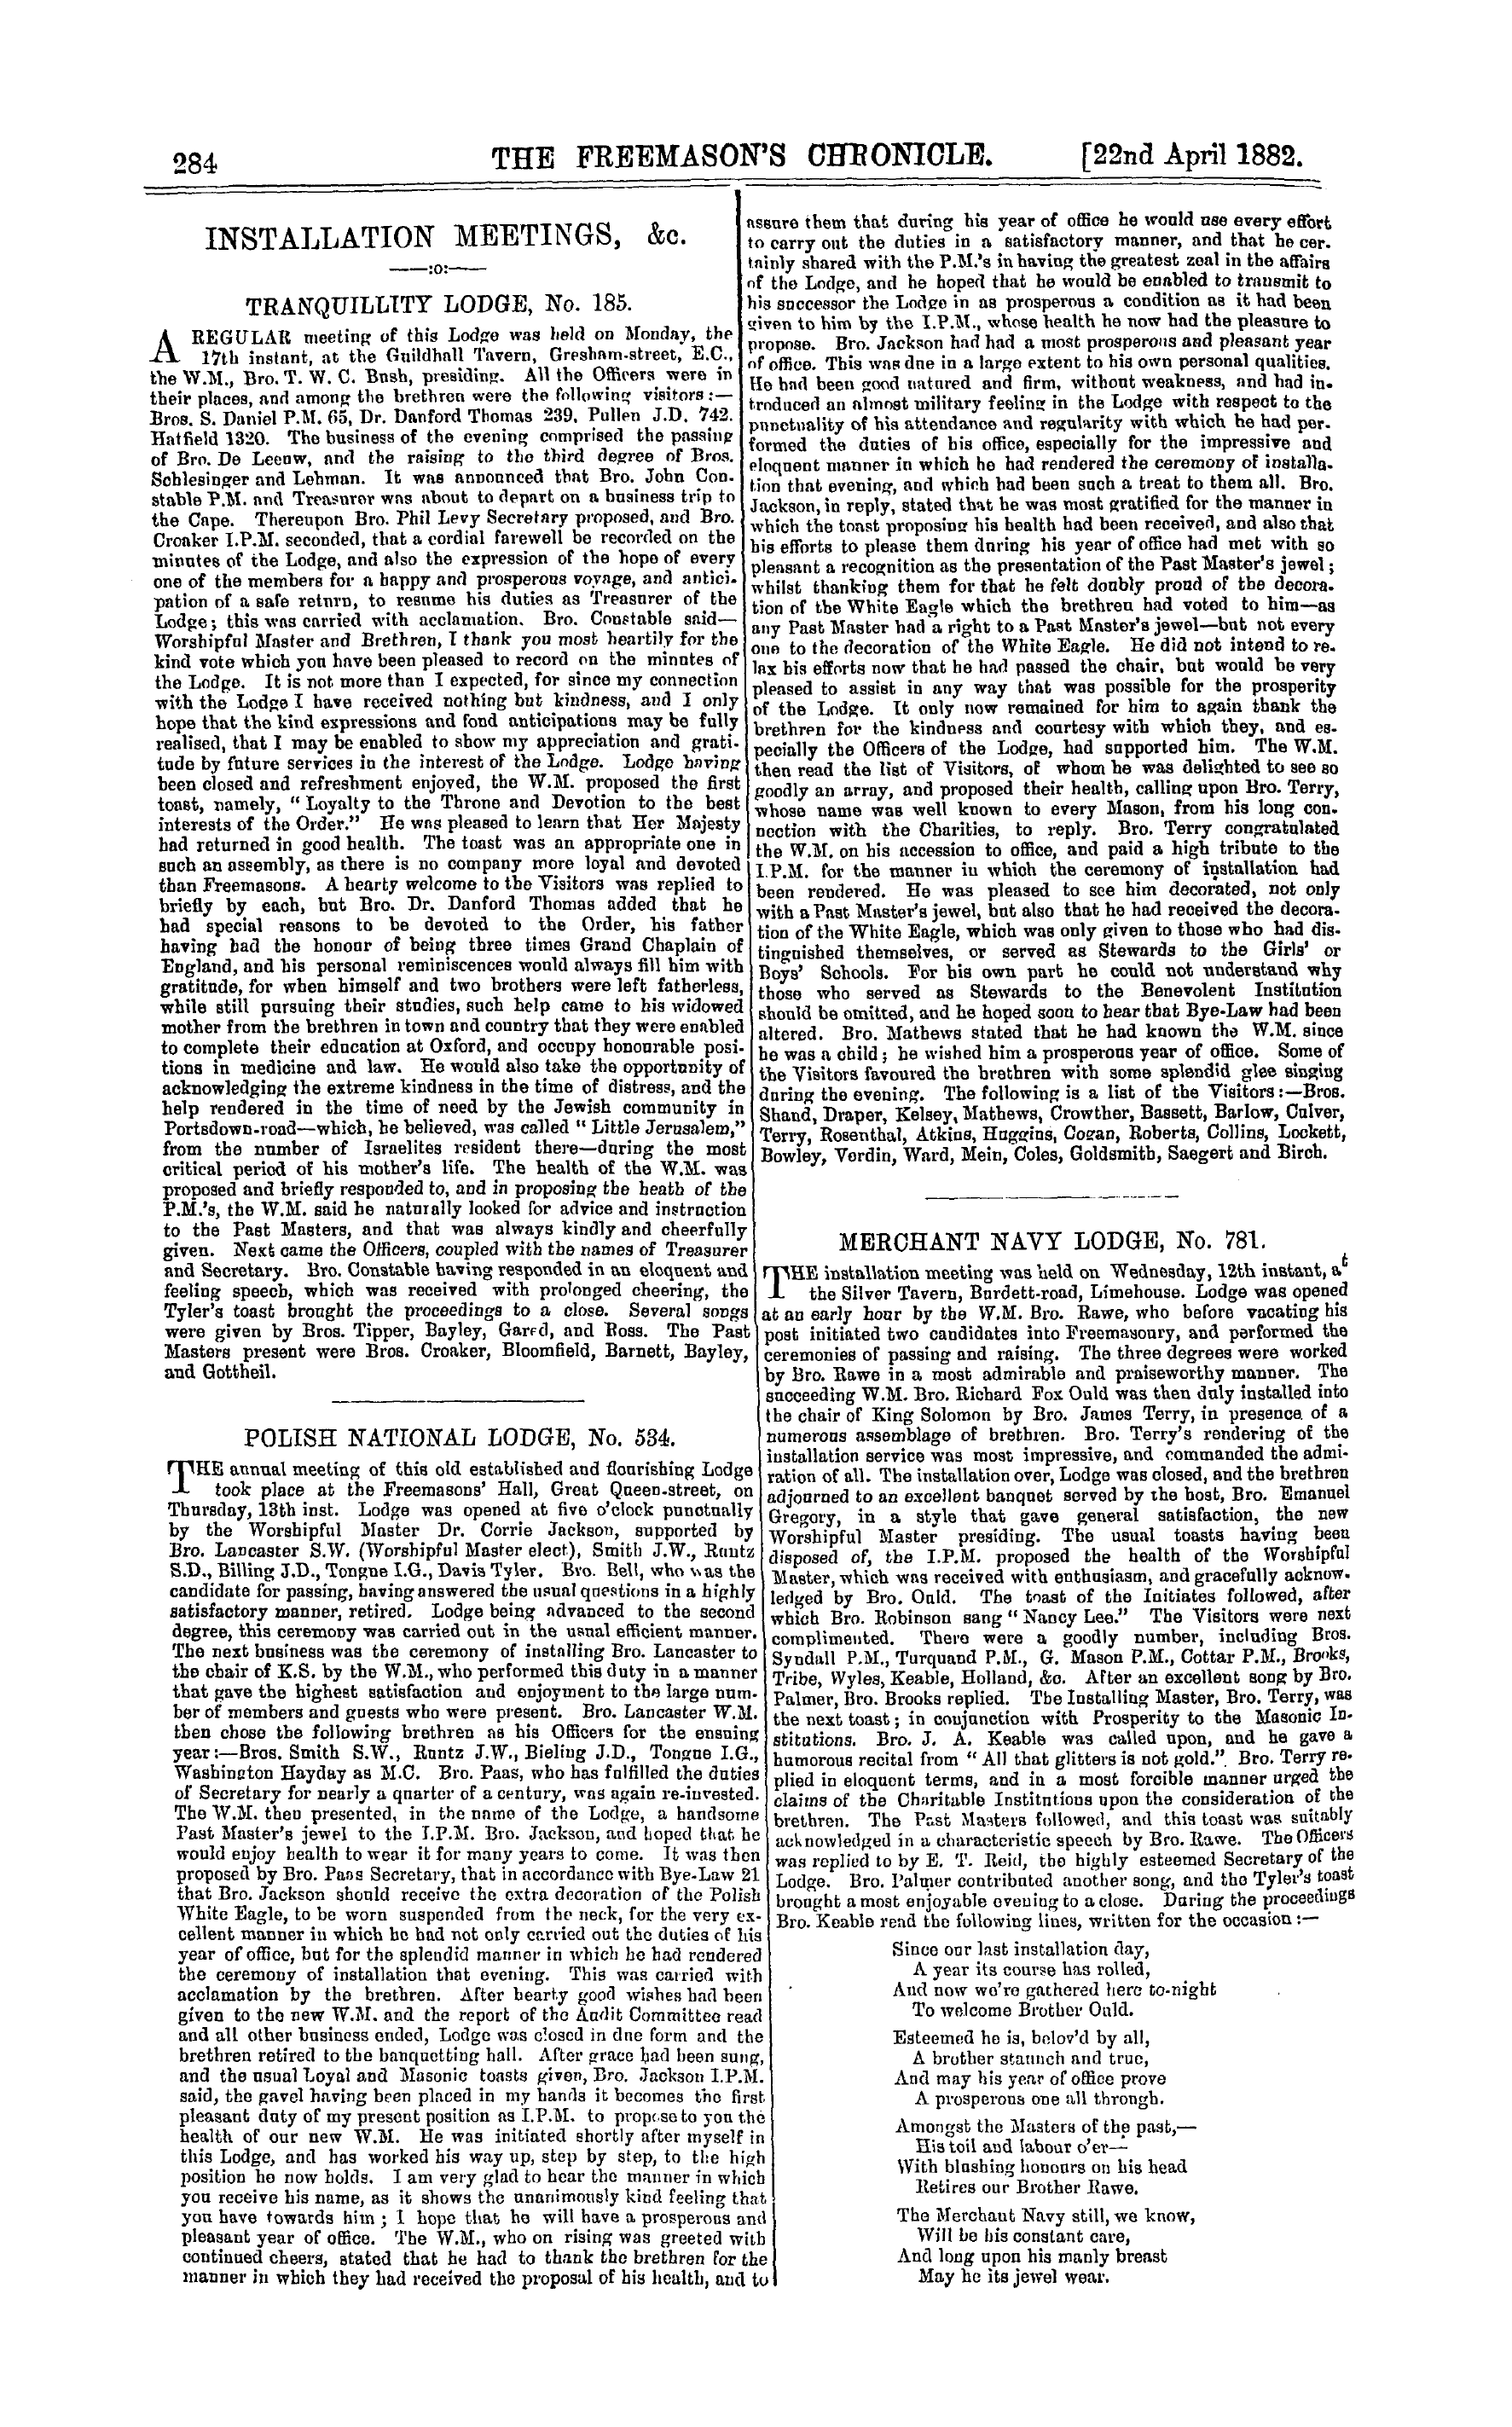 The Freemason's Chronicle: 1882-04-22 - Installation Meetings, &C.